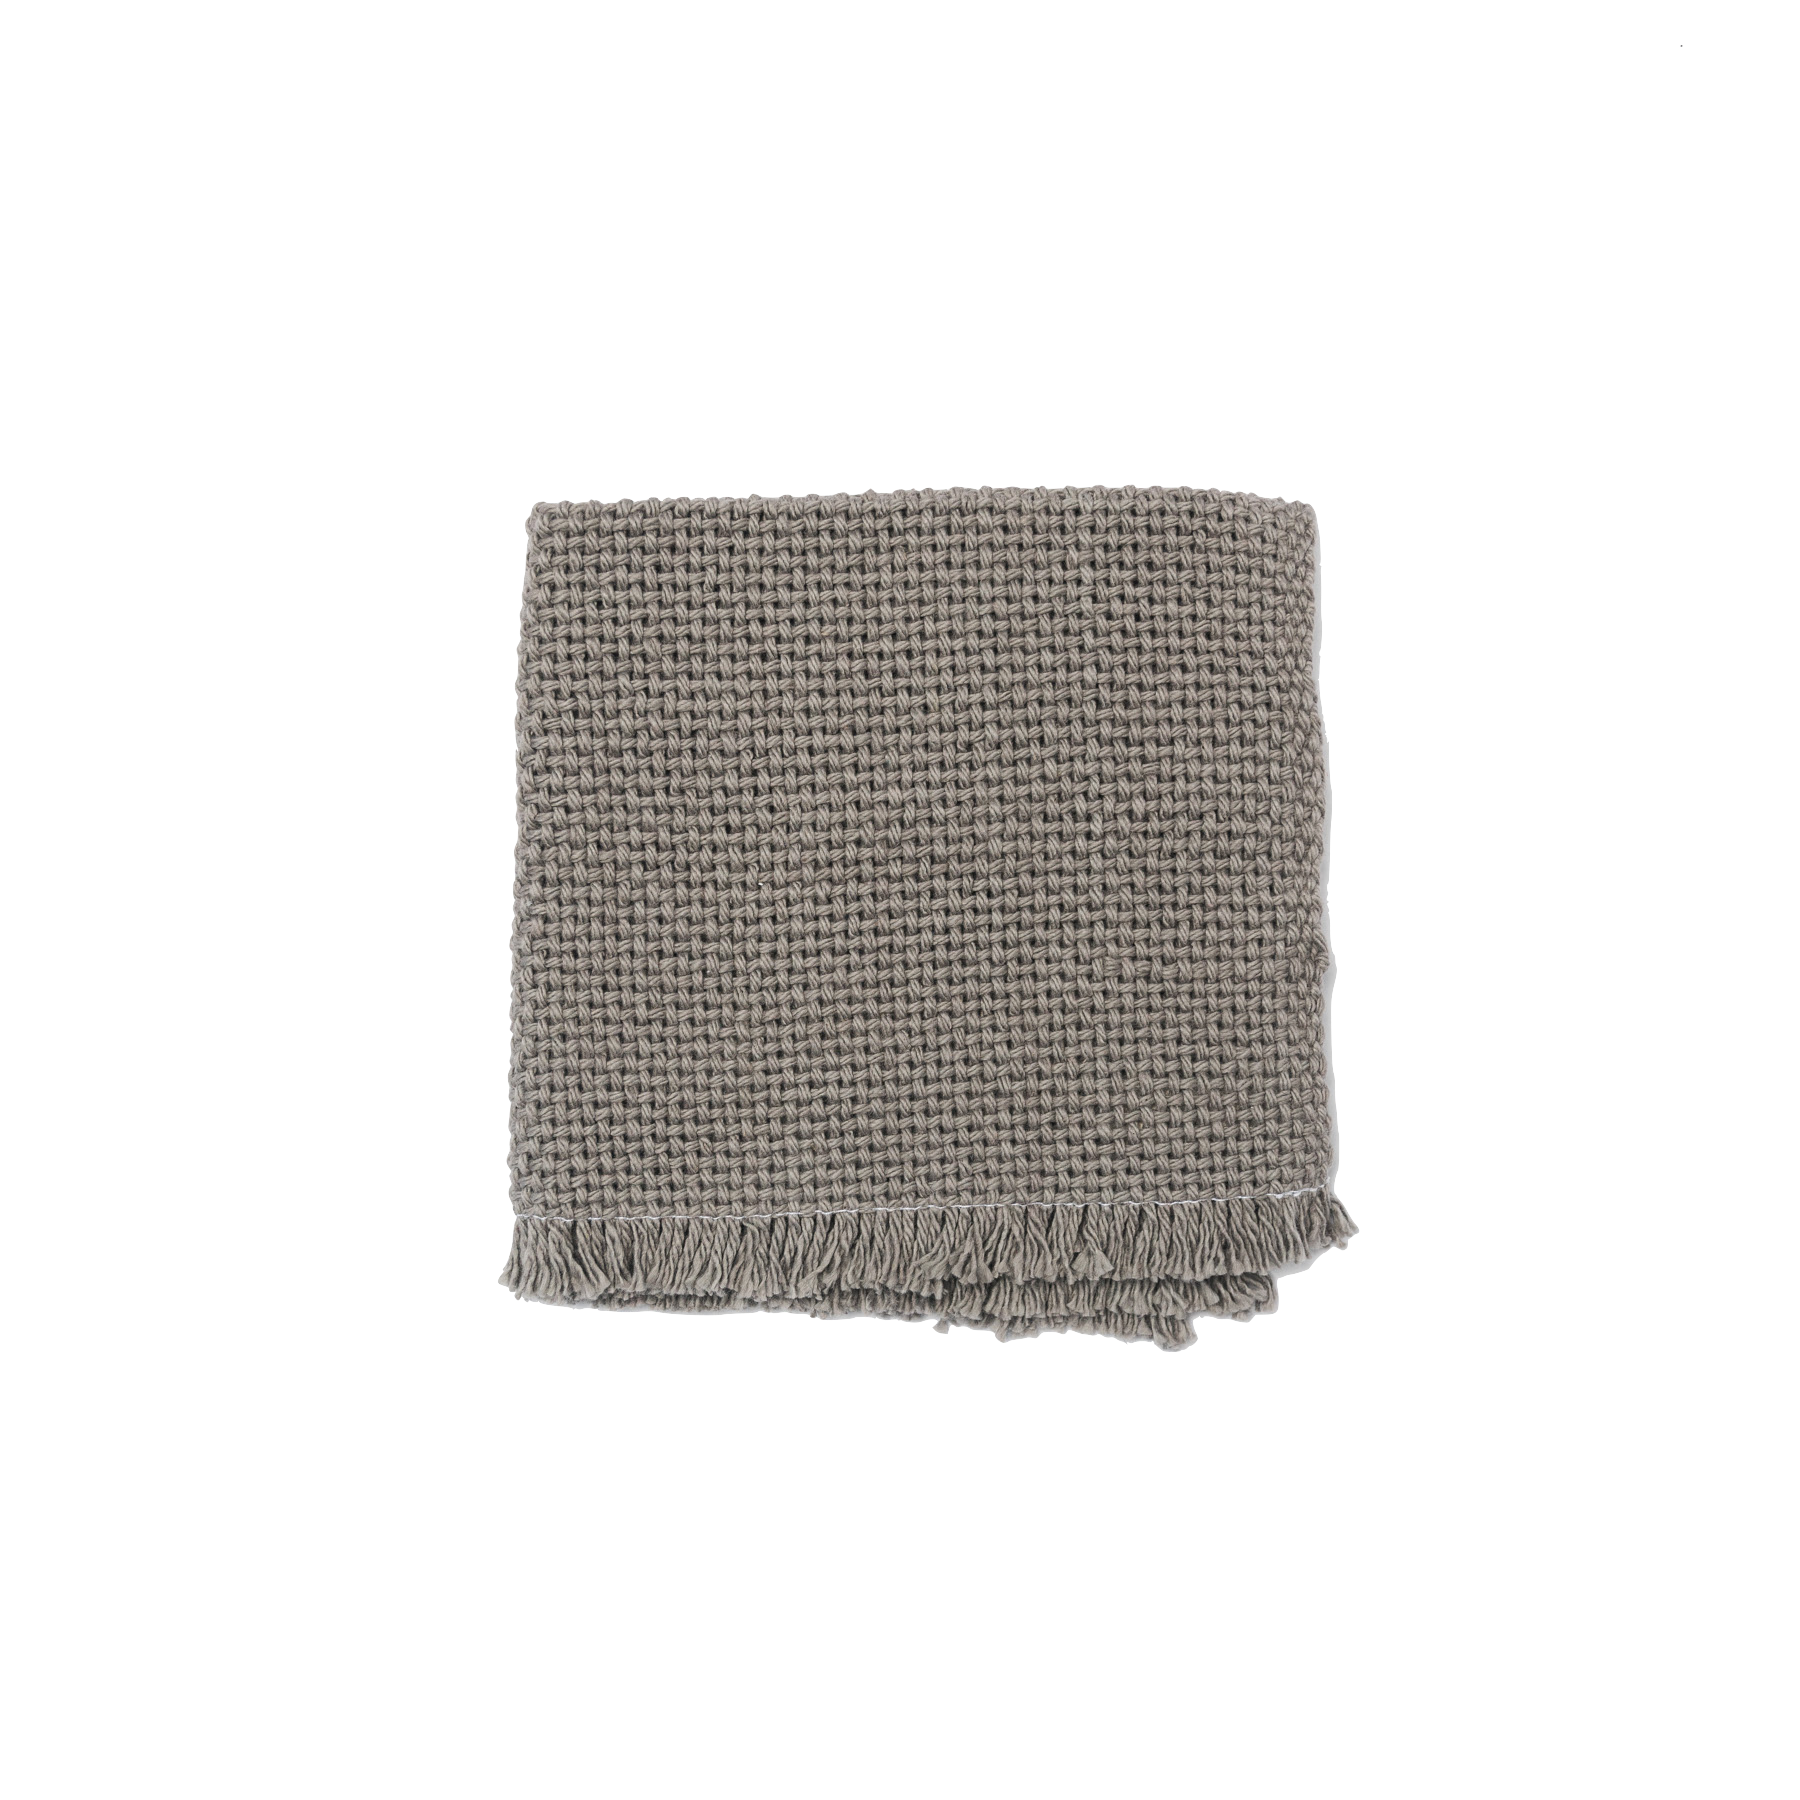 Folded gray wash cloth